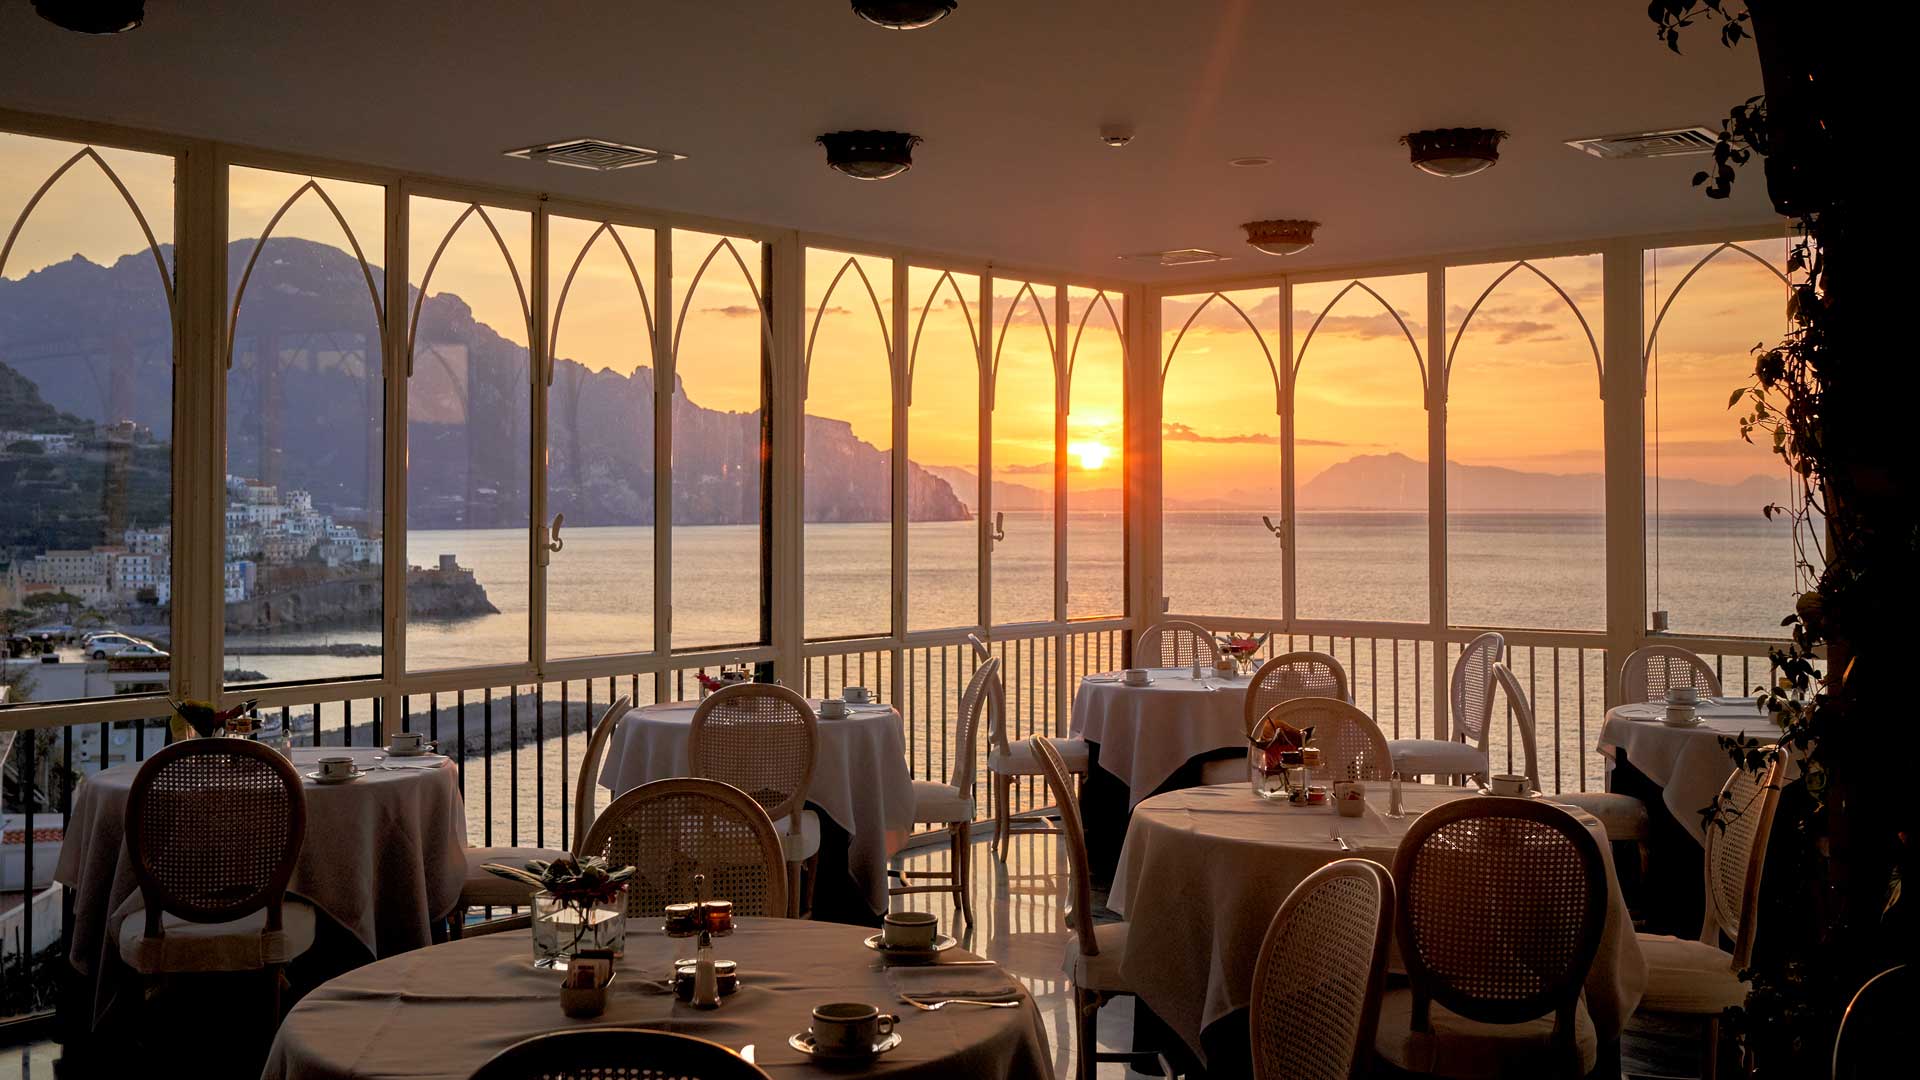 Sala-ristorante-glicine-hotel-santa-caterina-amalfi-robb-report-italia